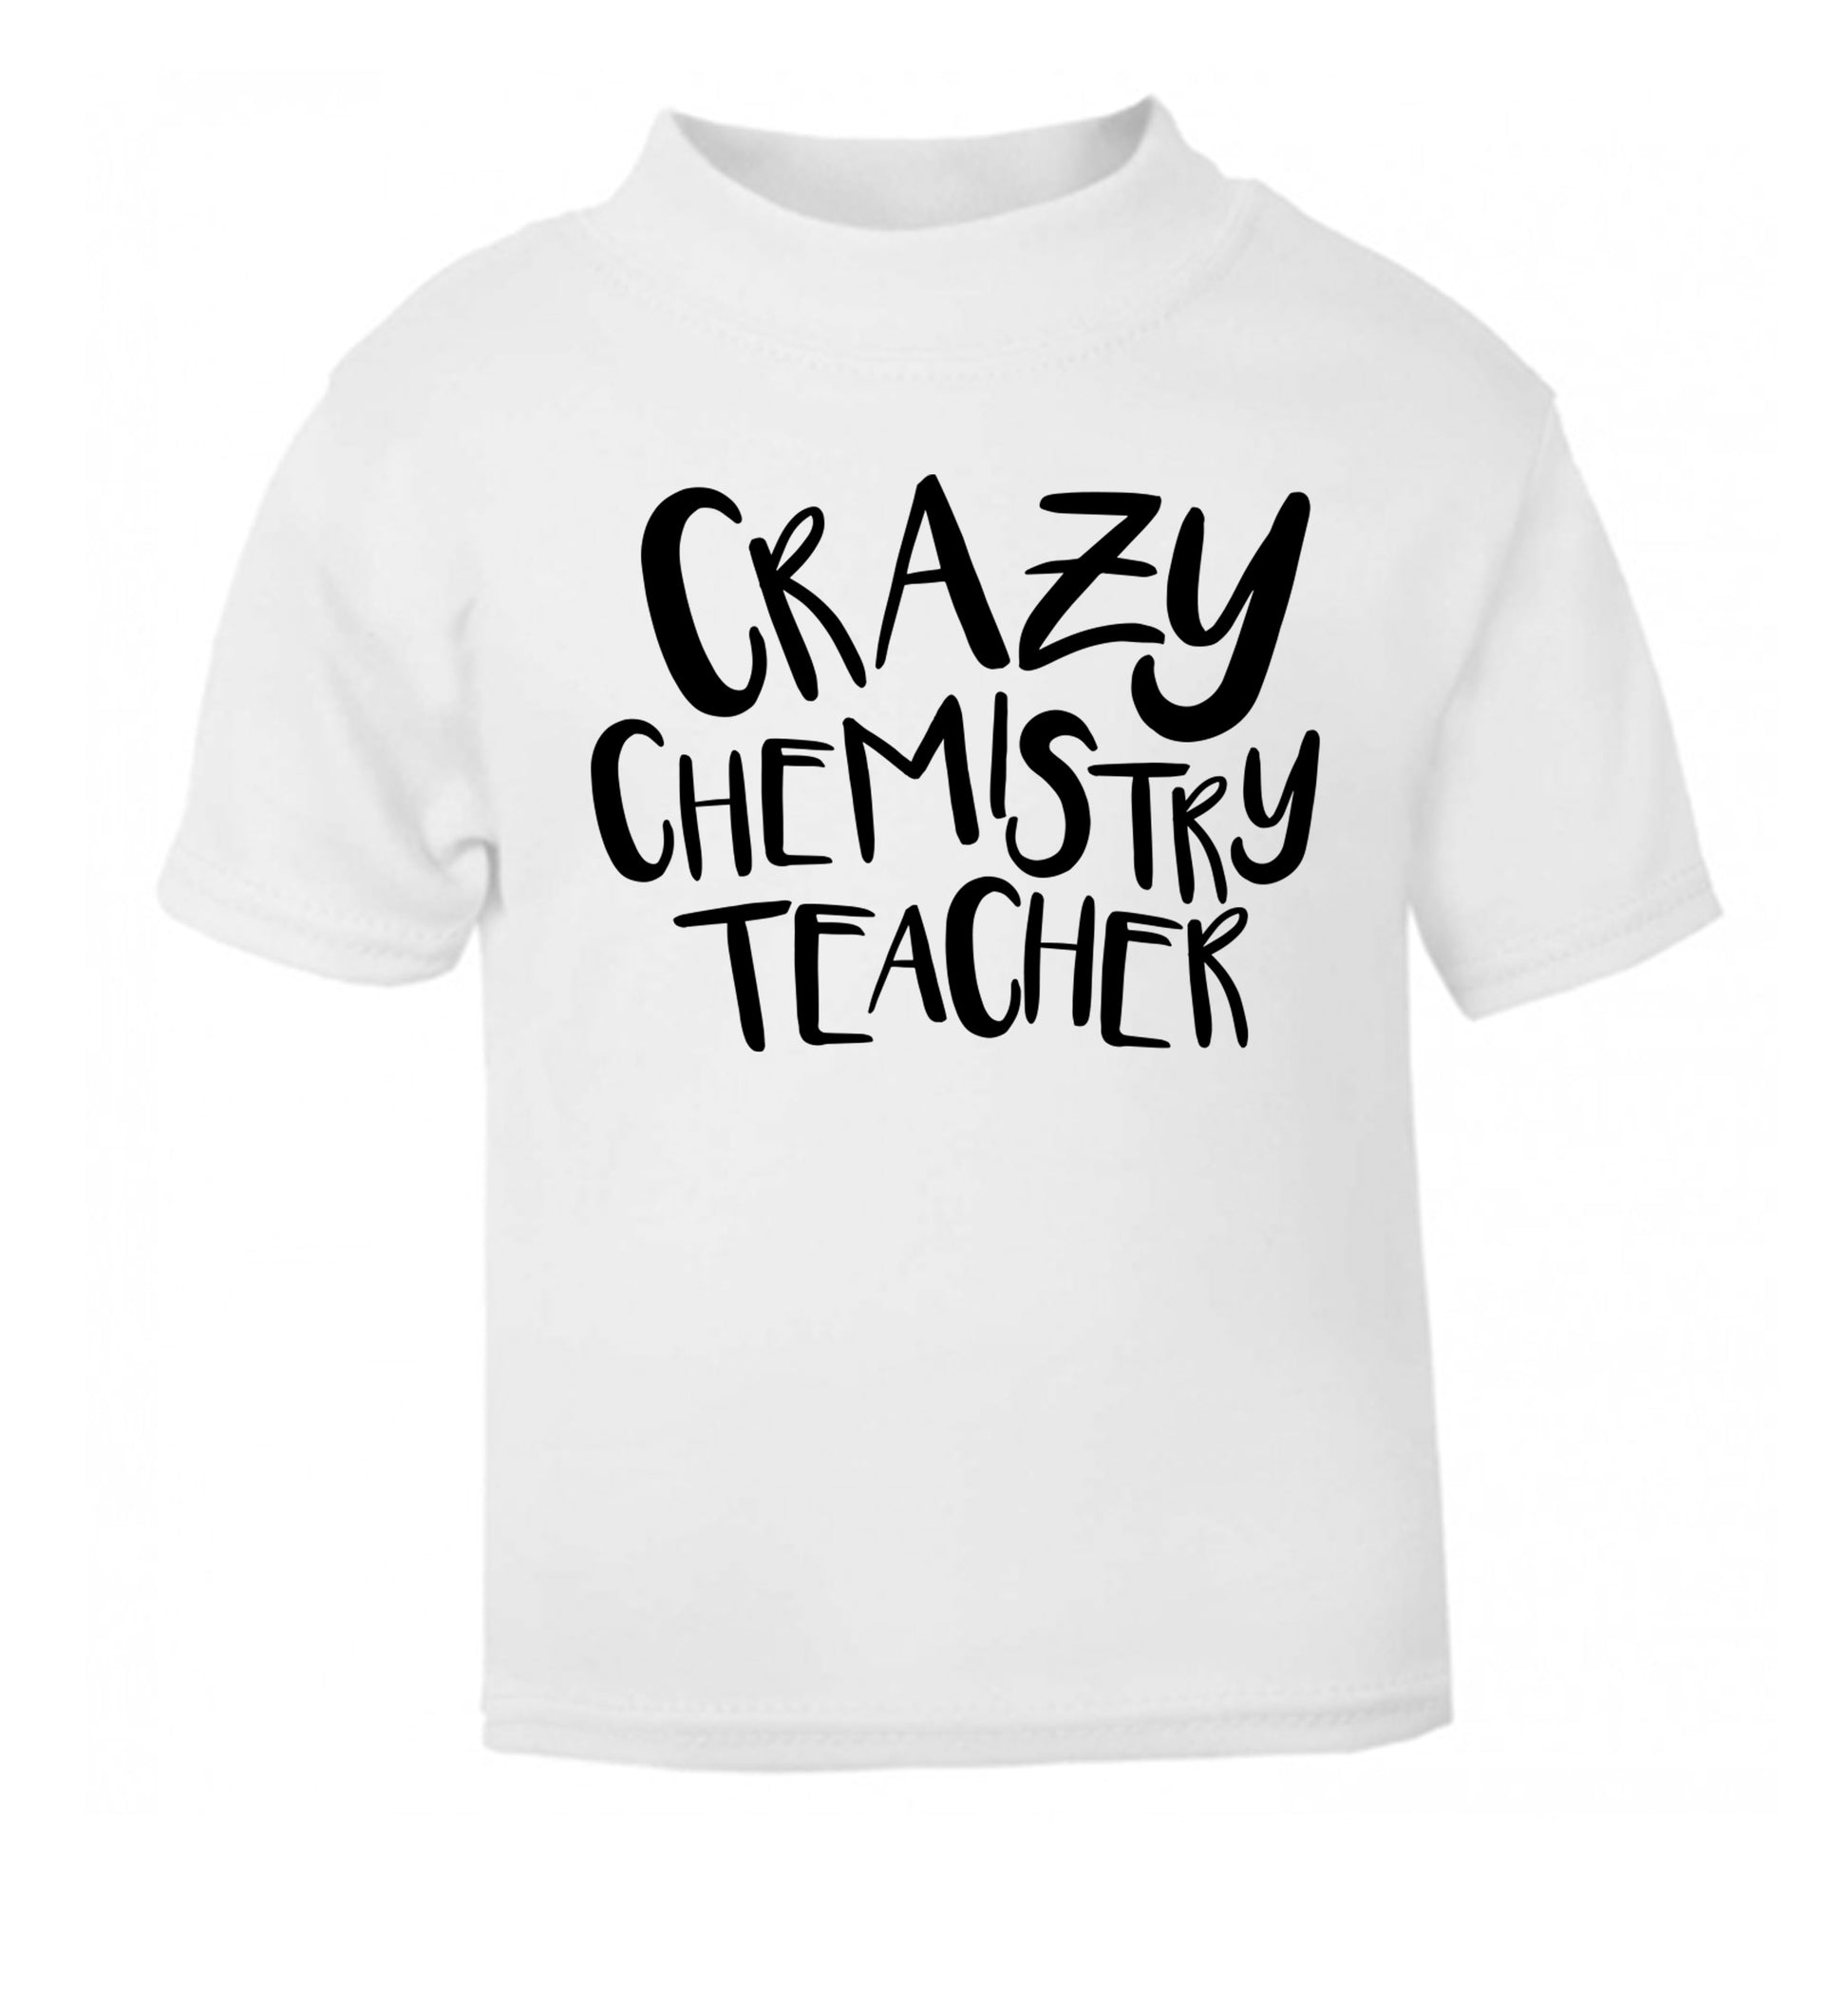 Crazy chemistry teacher white Baby Toddler Tshirt 2 Years